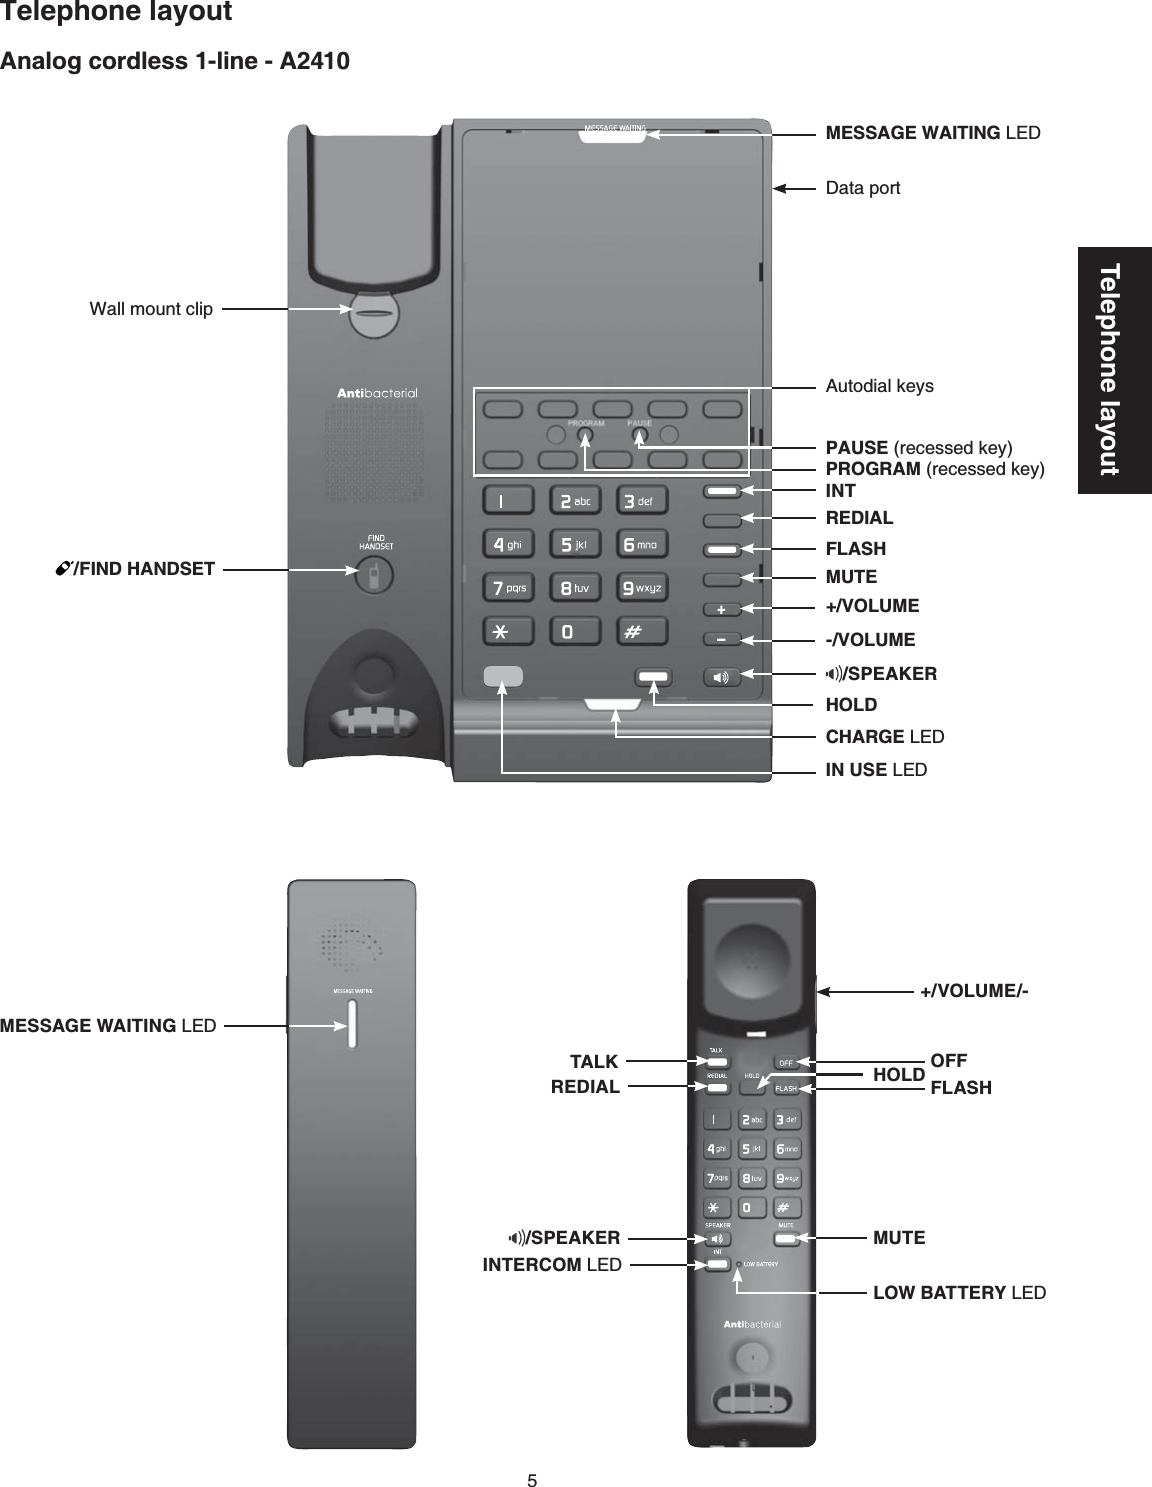 5Telephone layoutAnalog cordless 1-line - A2410Telephone layoutTALKREDIAL HOLD OFFFLASHINTERCOM.&apos;&amp;MUTE+/VOLUME/-MESSAGE WAITING.&apos;&amp;&amp;CVCRQTVMESSAGE WAITING.&apos;&amp;/SPEAKERLOW BATTERY.&apos;&amp;CHARGE.&apos;&amp;HOLDMUTEFLASHREDIAL/SPEAKER/FIND HANDSETIN USE.&apos;&amp;Wall mount clipPROGRAM (recessed key)PAUSE (recessed key)Autodial keysINT-/VOLUME+/VOLUME